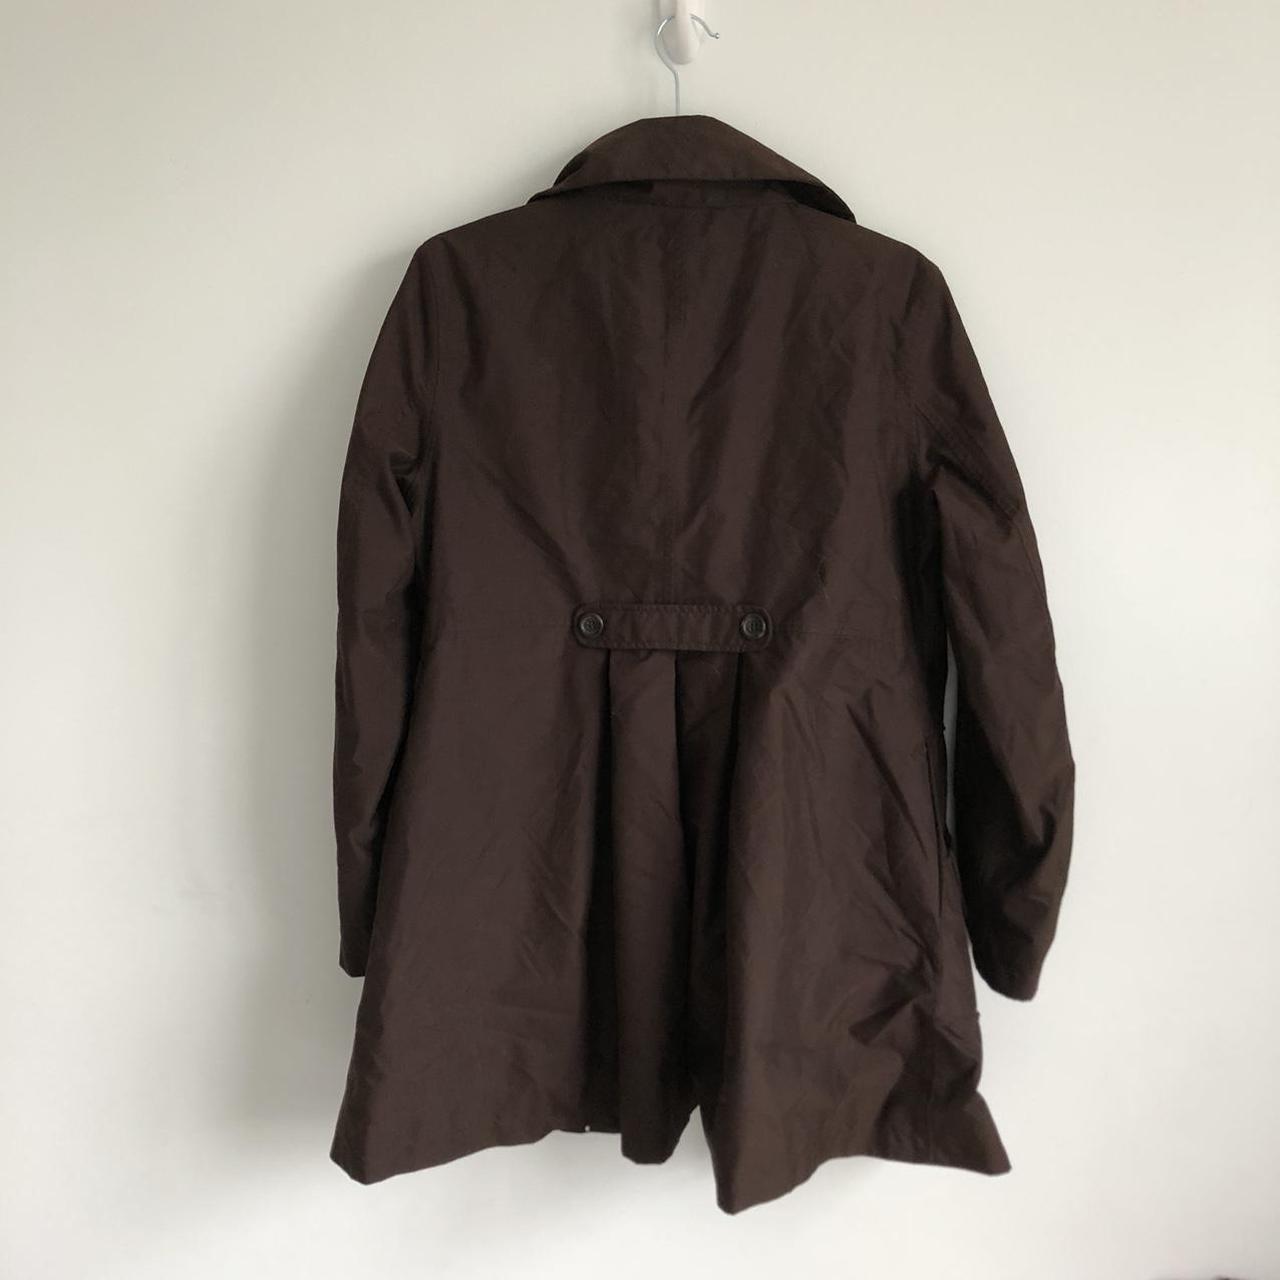 Product Image 3 - Lands end brown jacket. Size